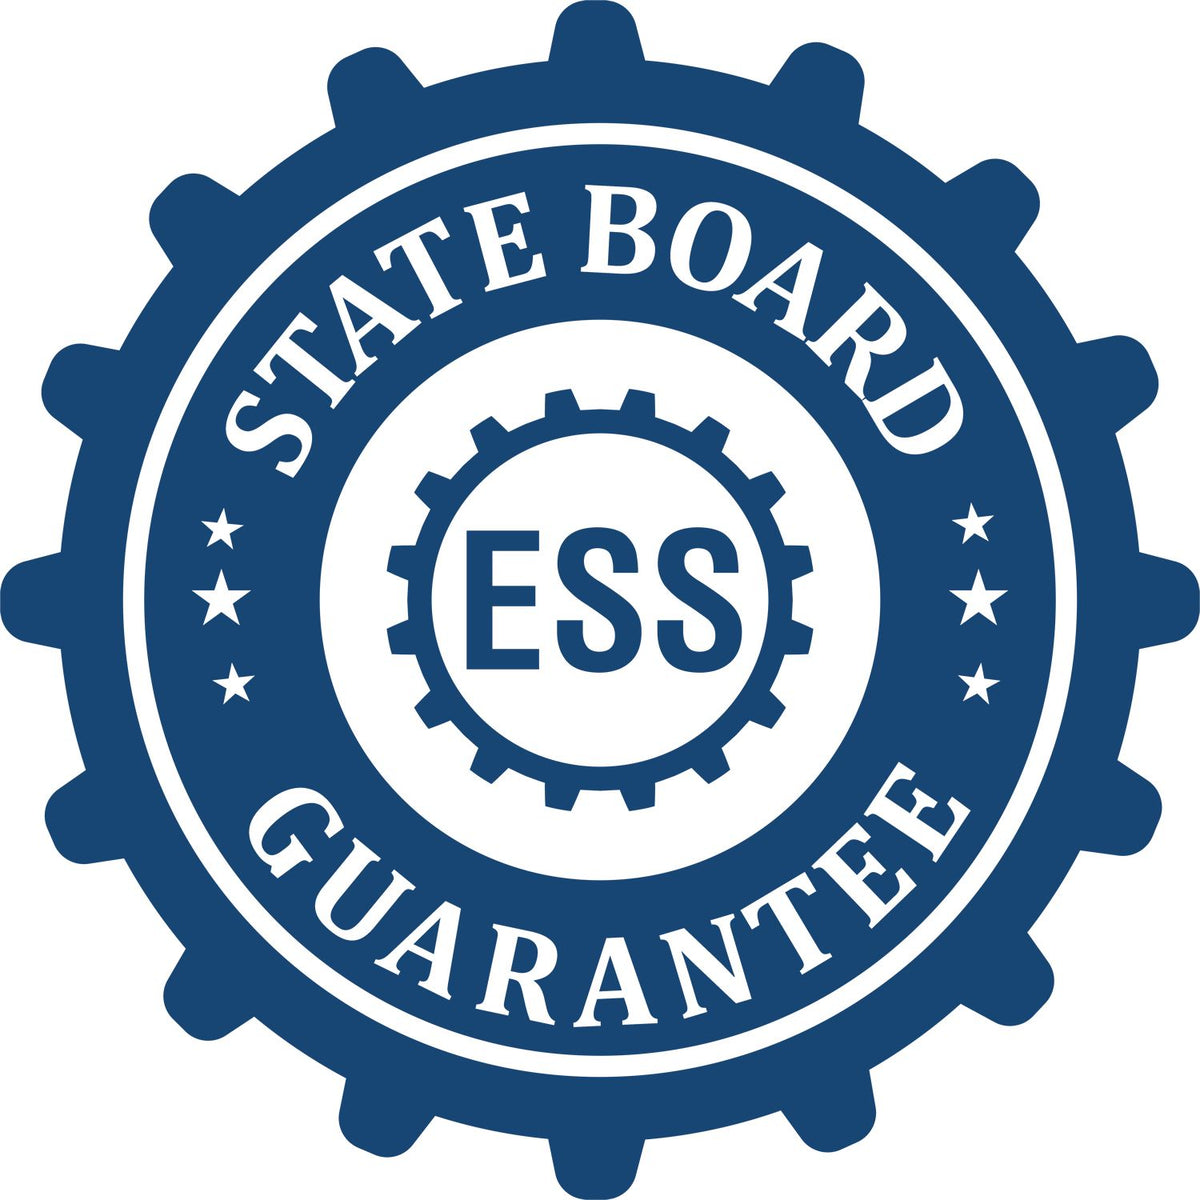 Professional Cast Iron Desk Seal Embosser 3027 State Board Guarantee